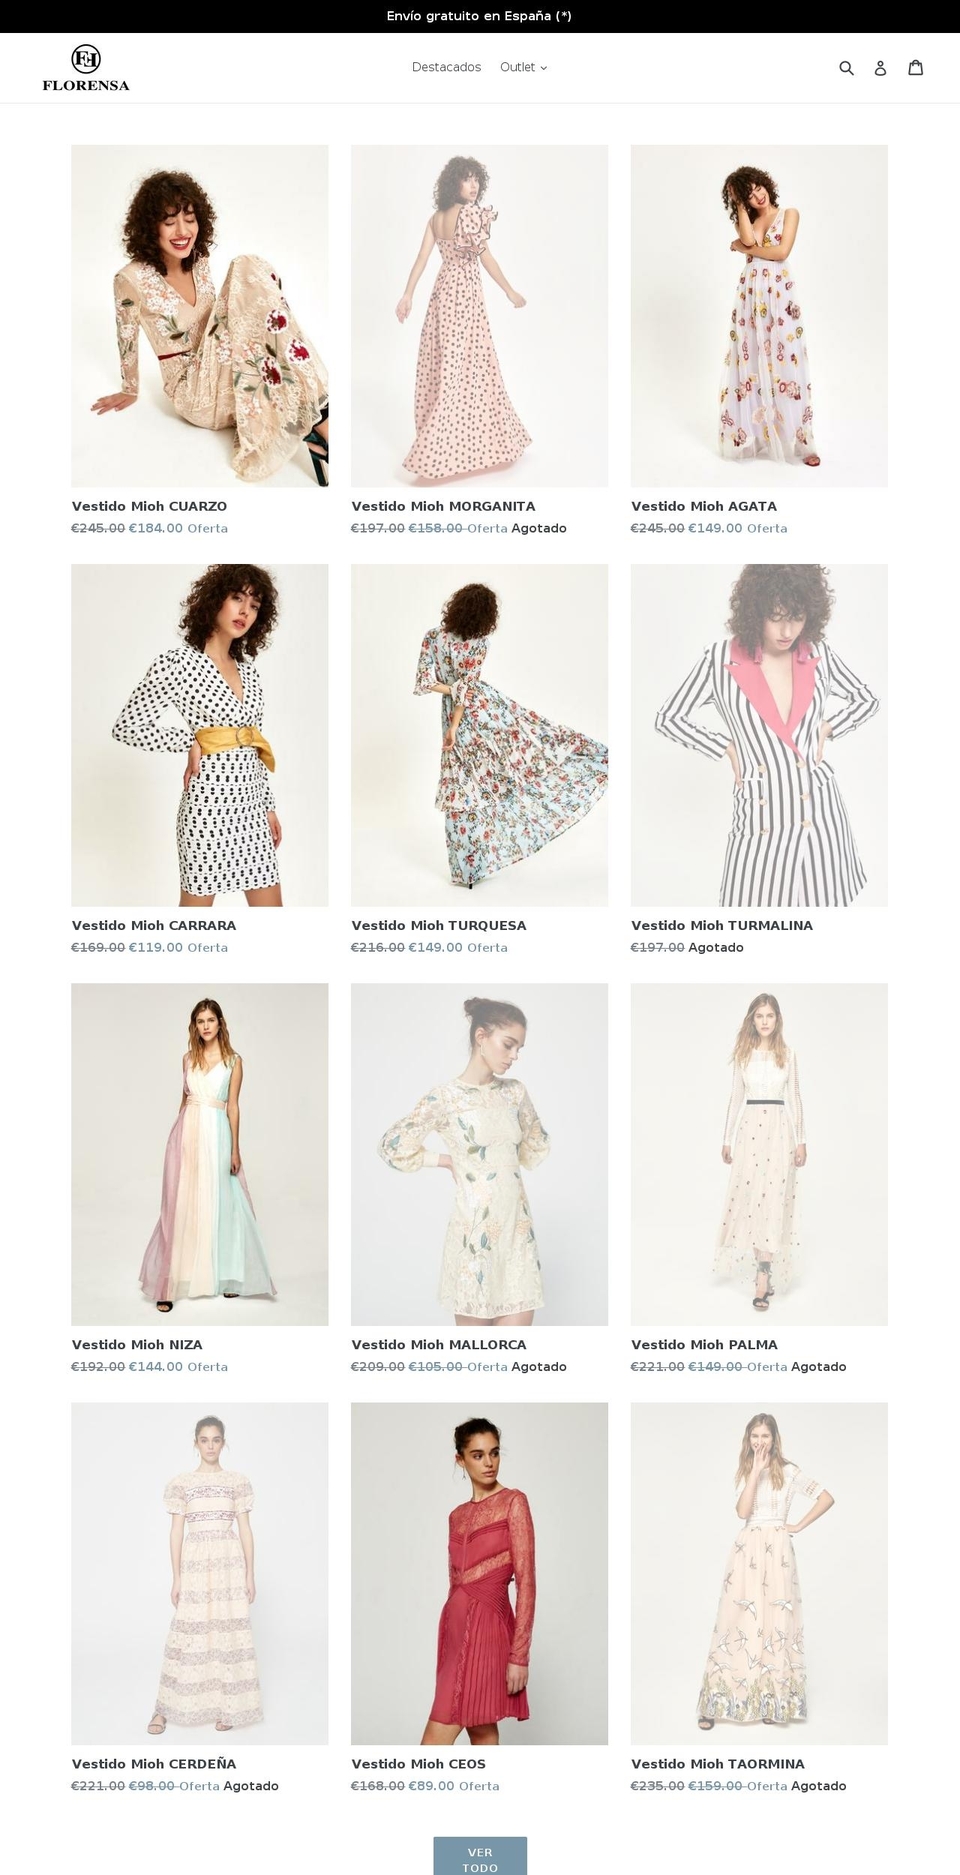 florensa.moda shopify website screenshot